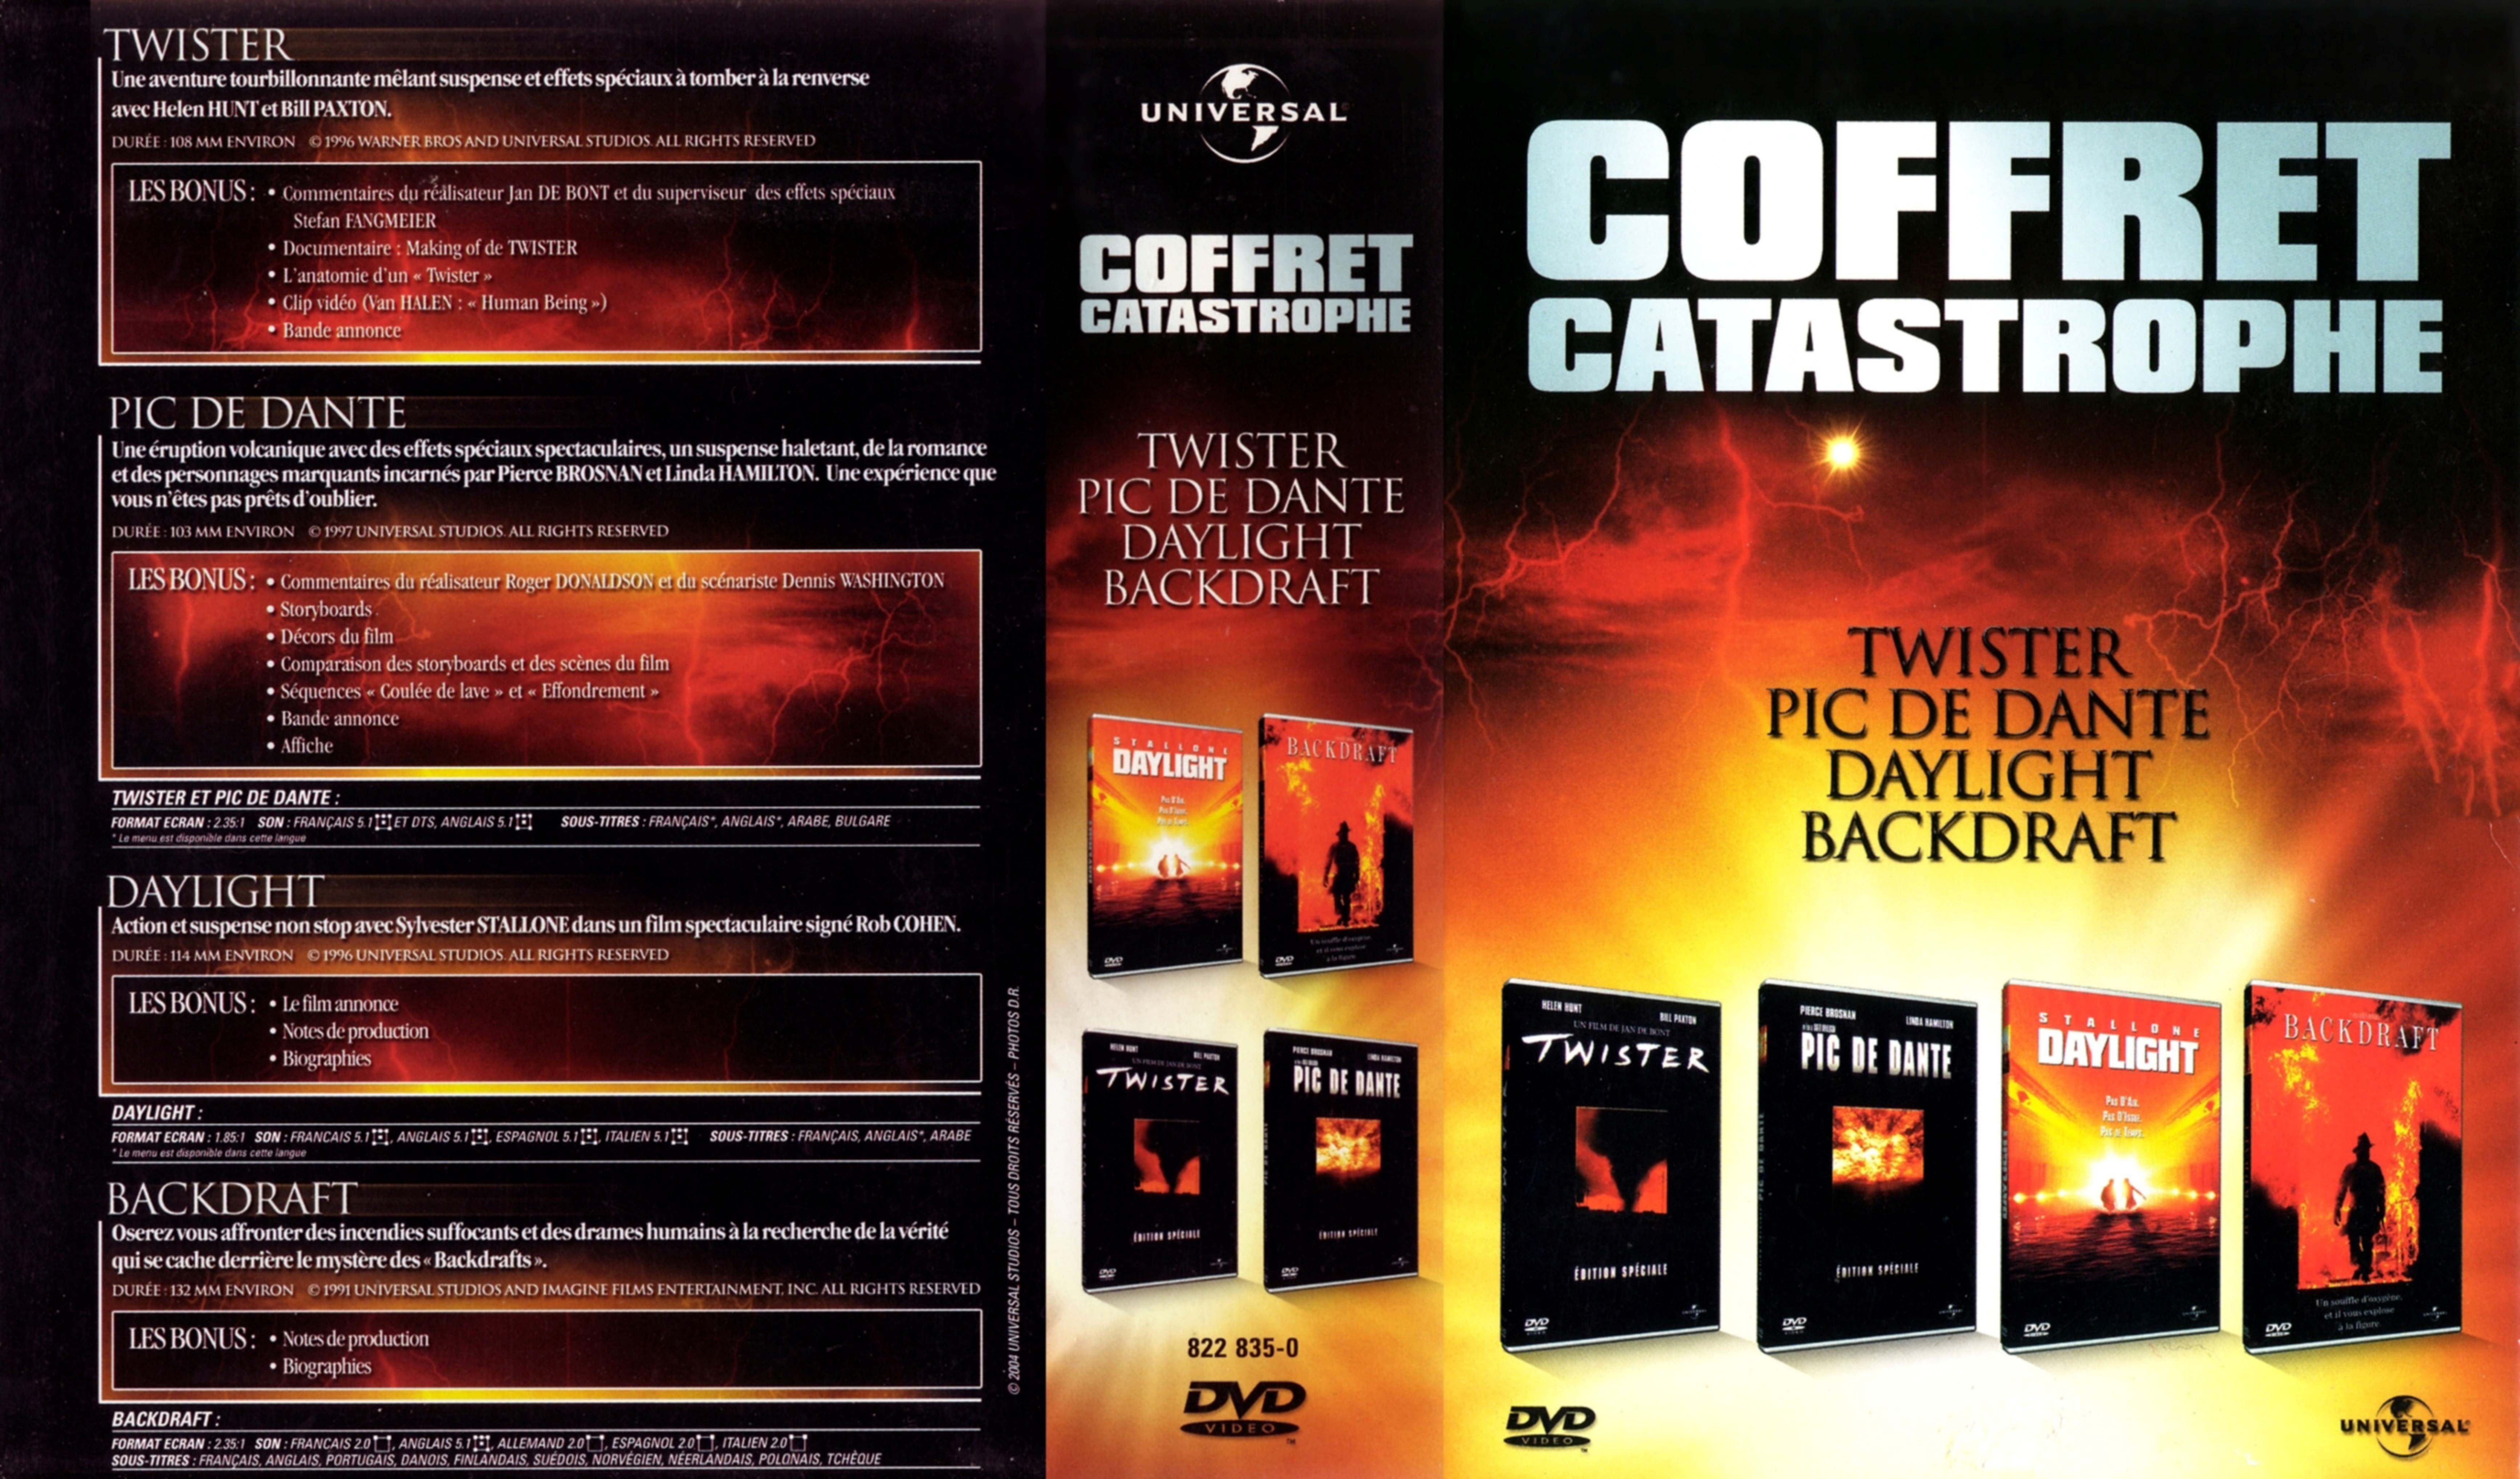 Jaquette DVD Coffret Catastrophe Twister + Backdraft + Pic de dante + Daylight